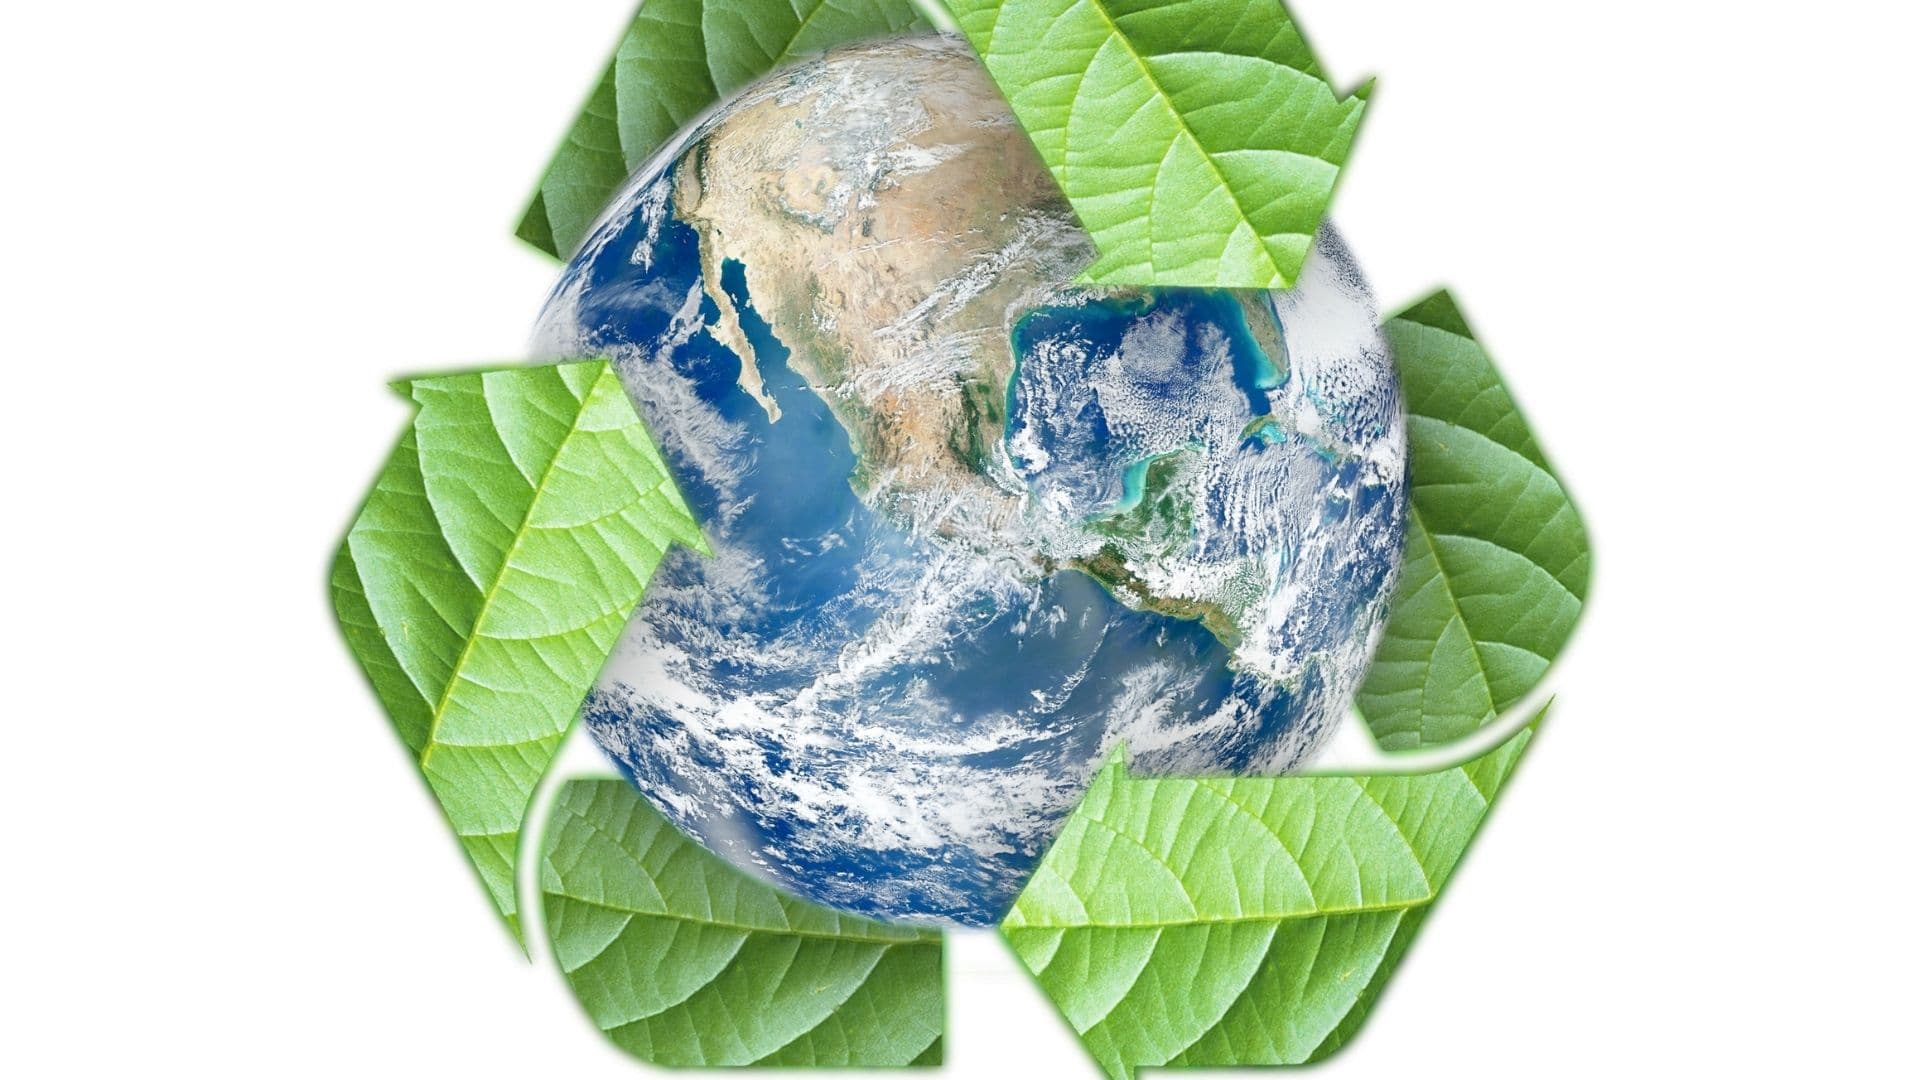 logo eco friendly